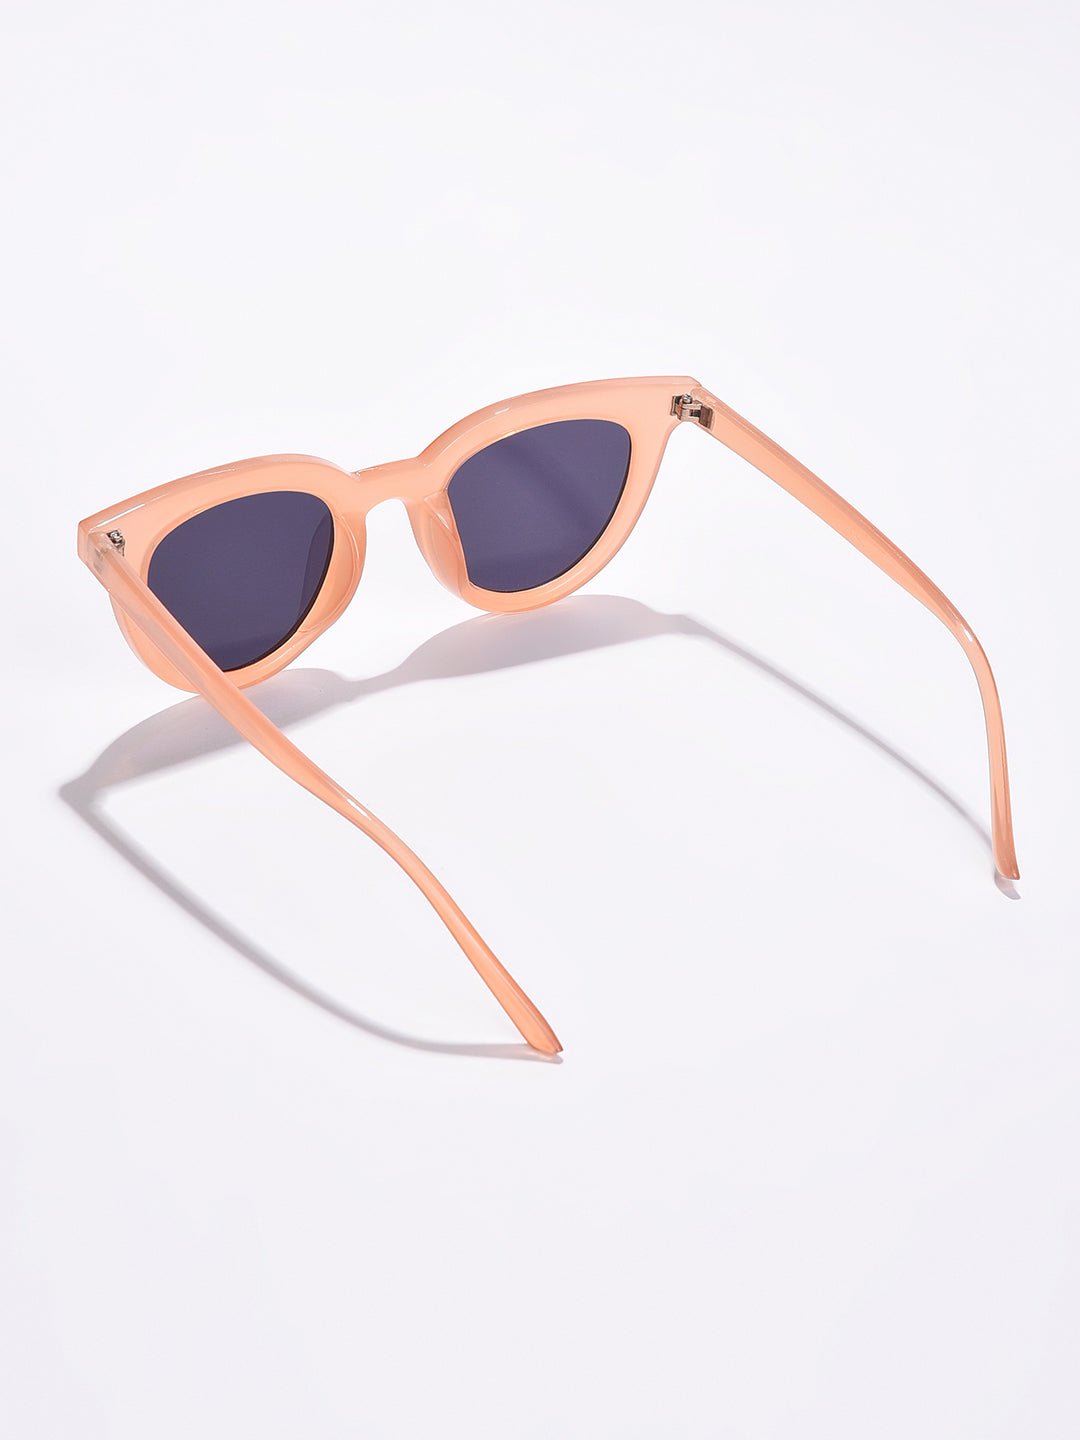 Black Lens Pink Cateye Sunglasses